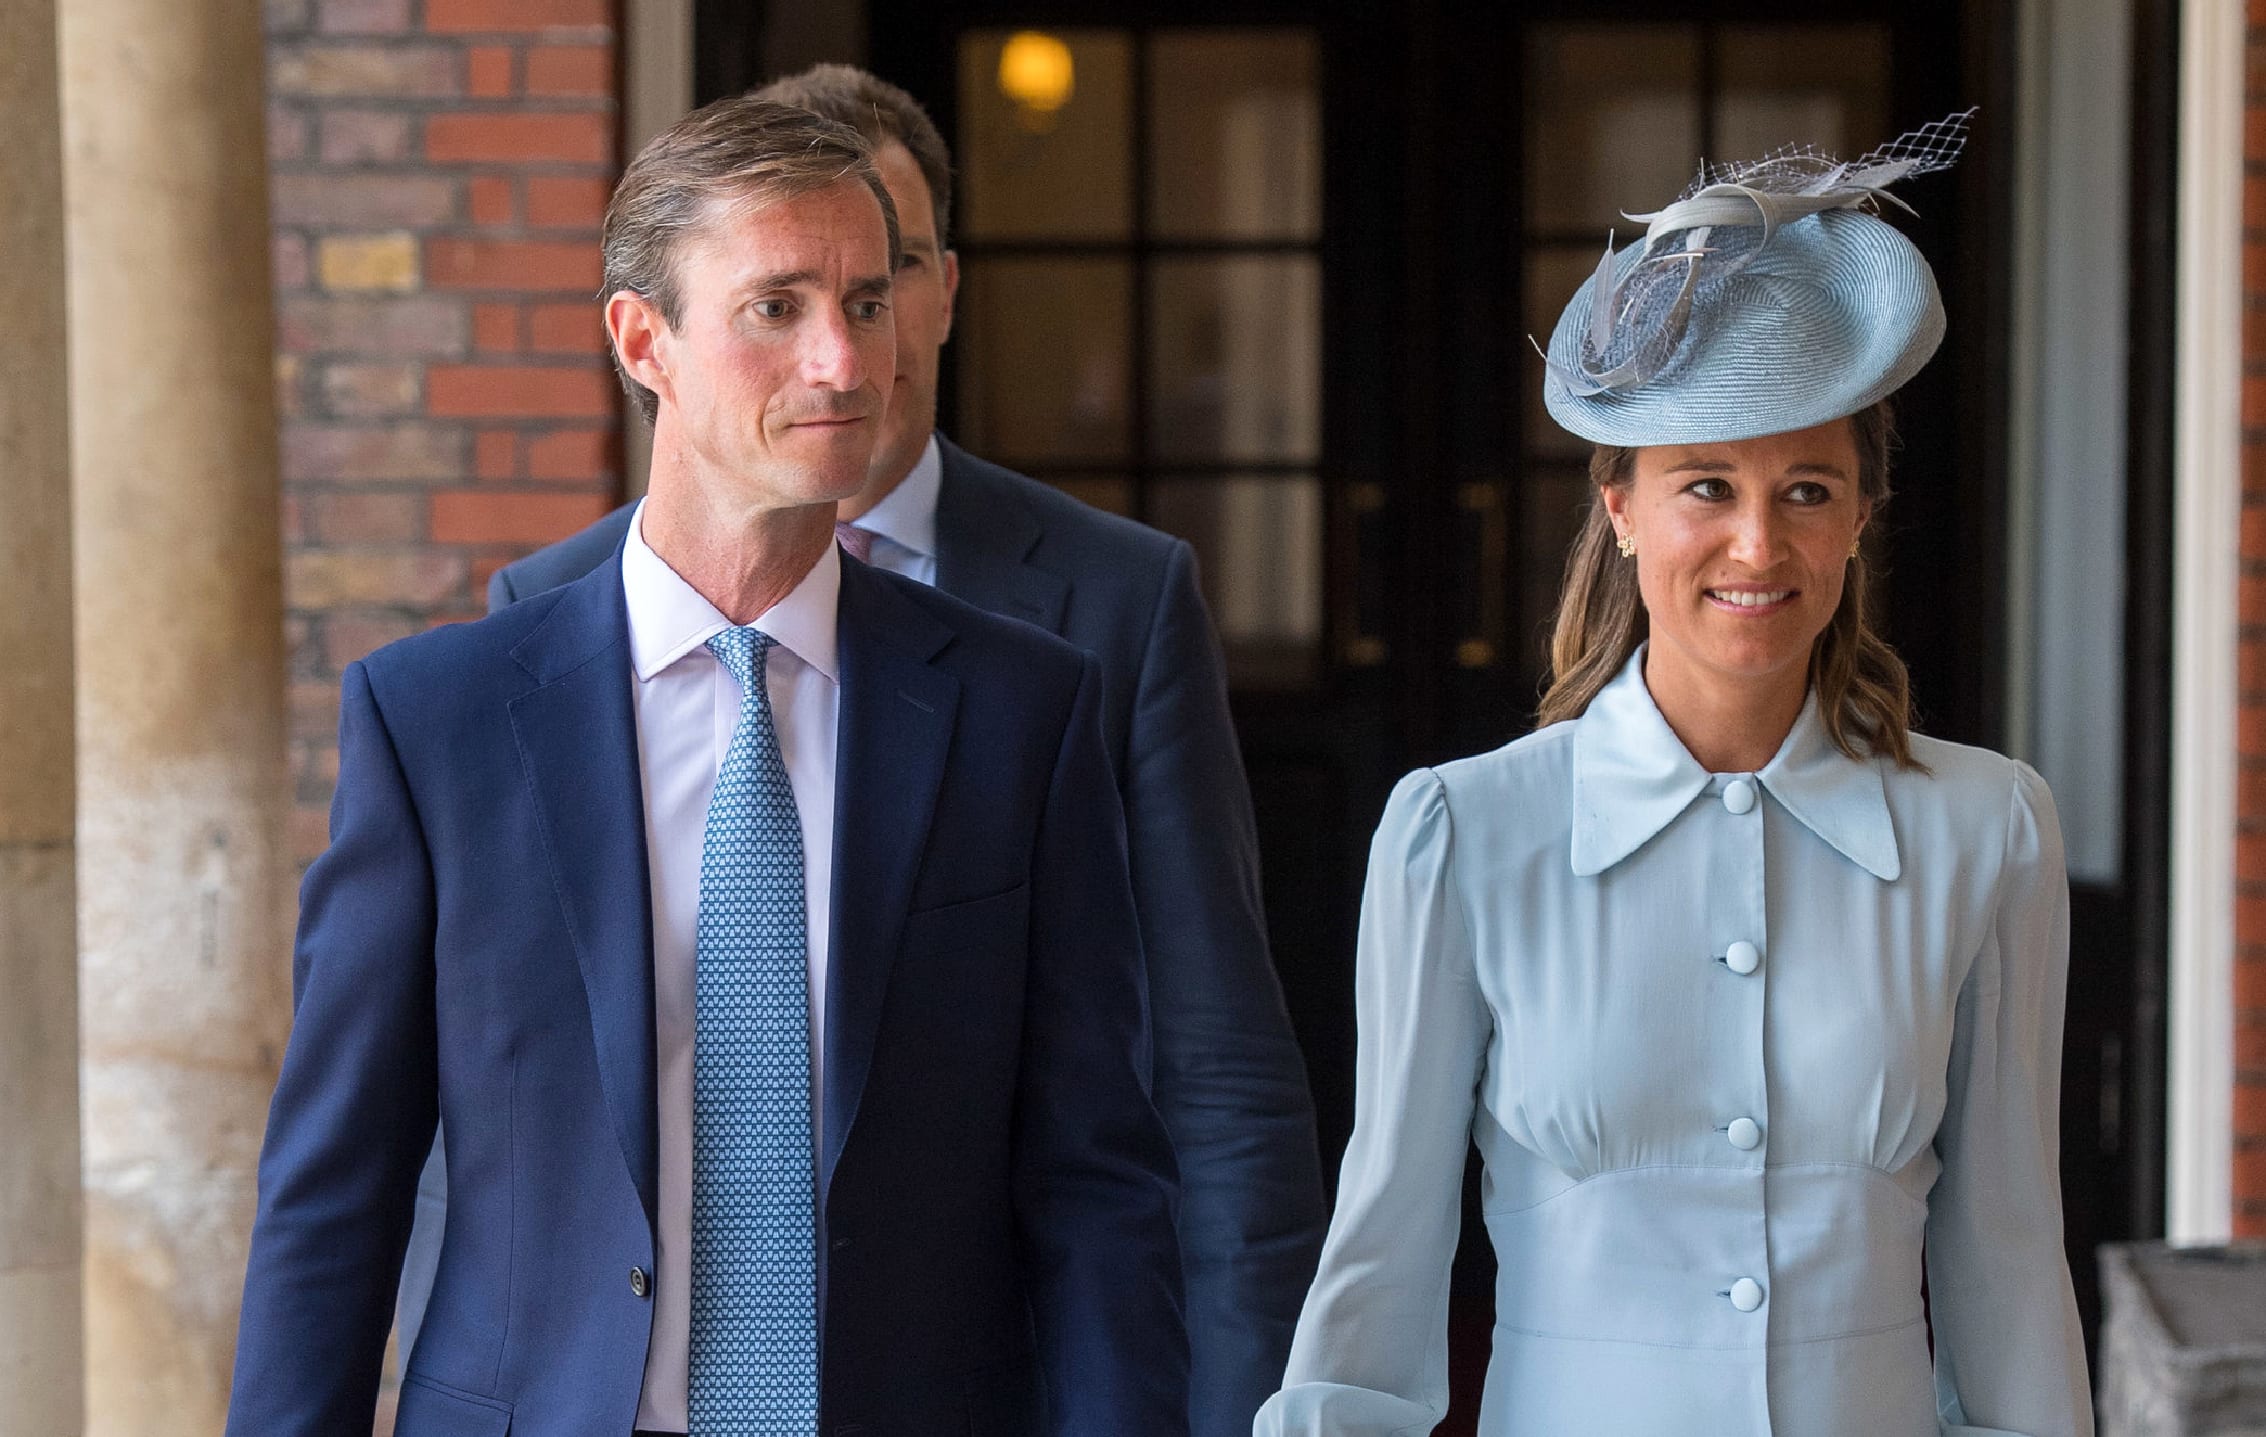 Pippa Middleton arrives with her husband James Matthews.